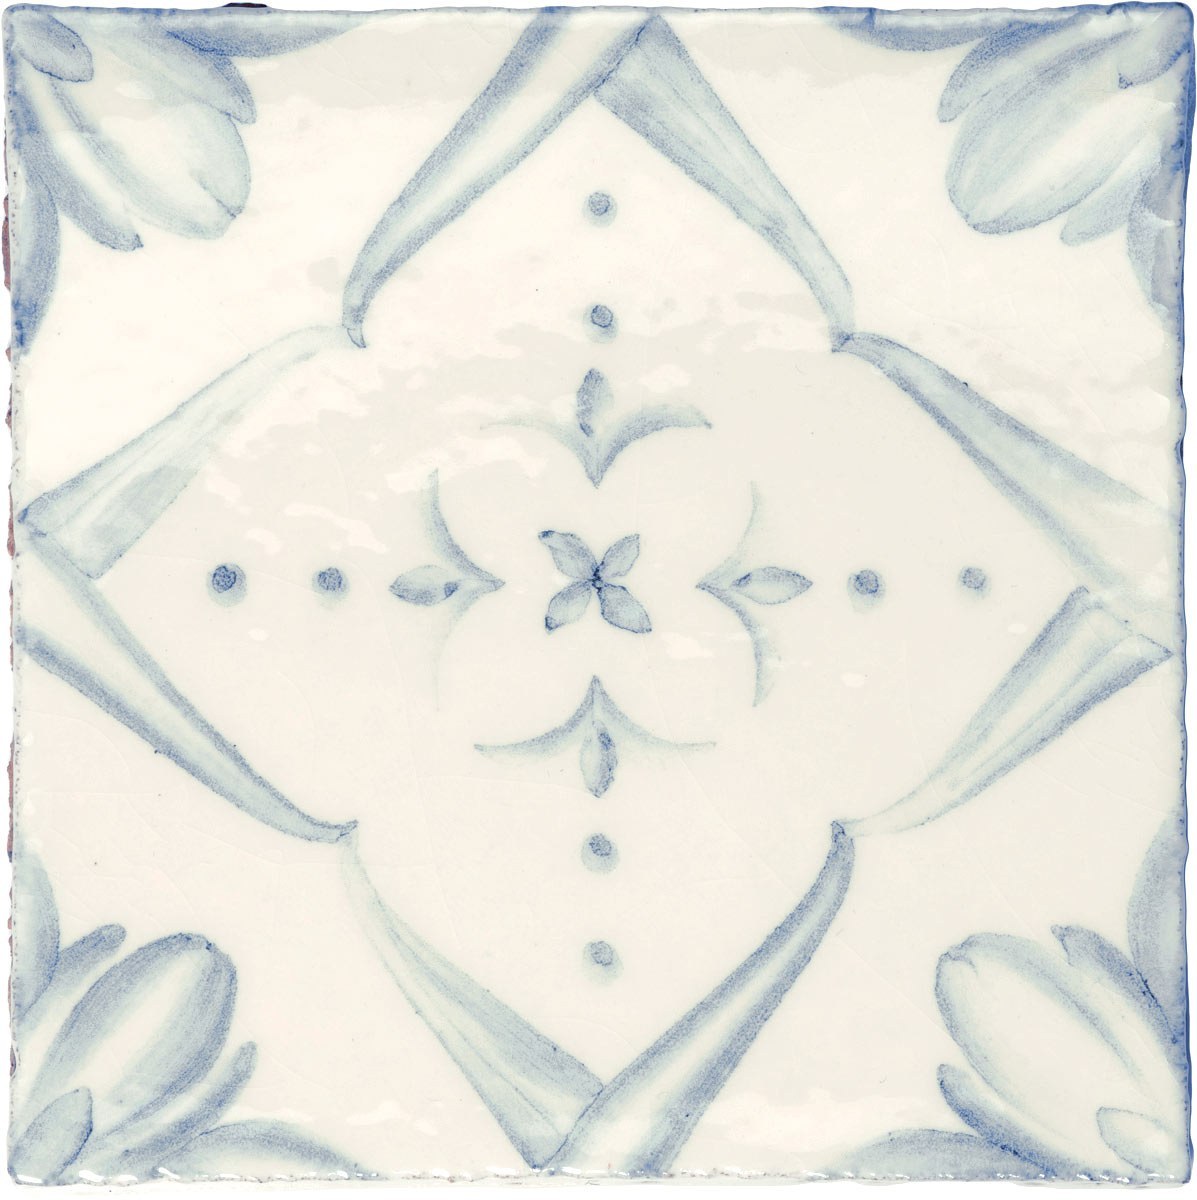 Ana Powder Blue Square, product variant image